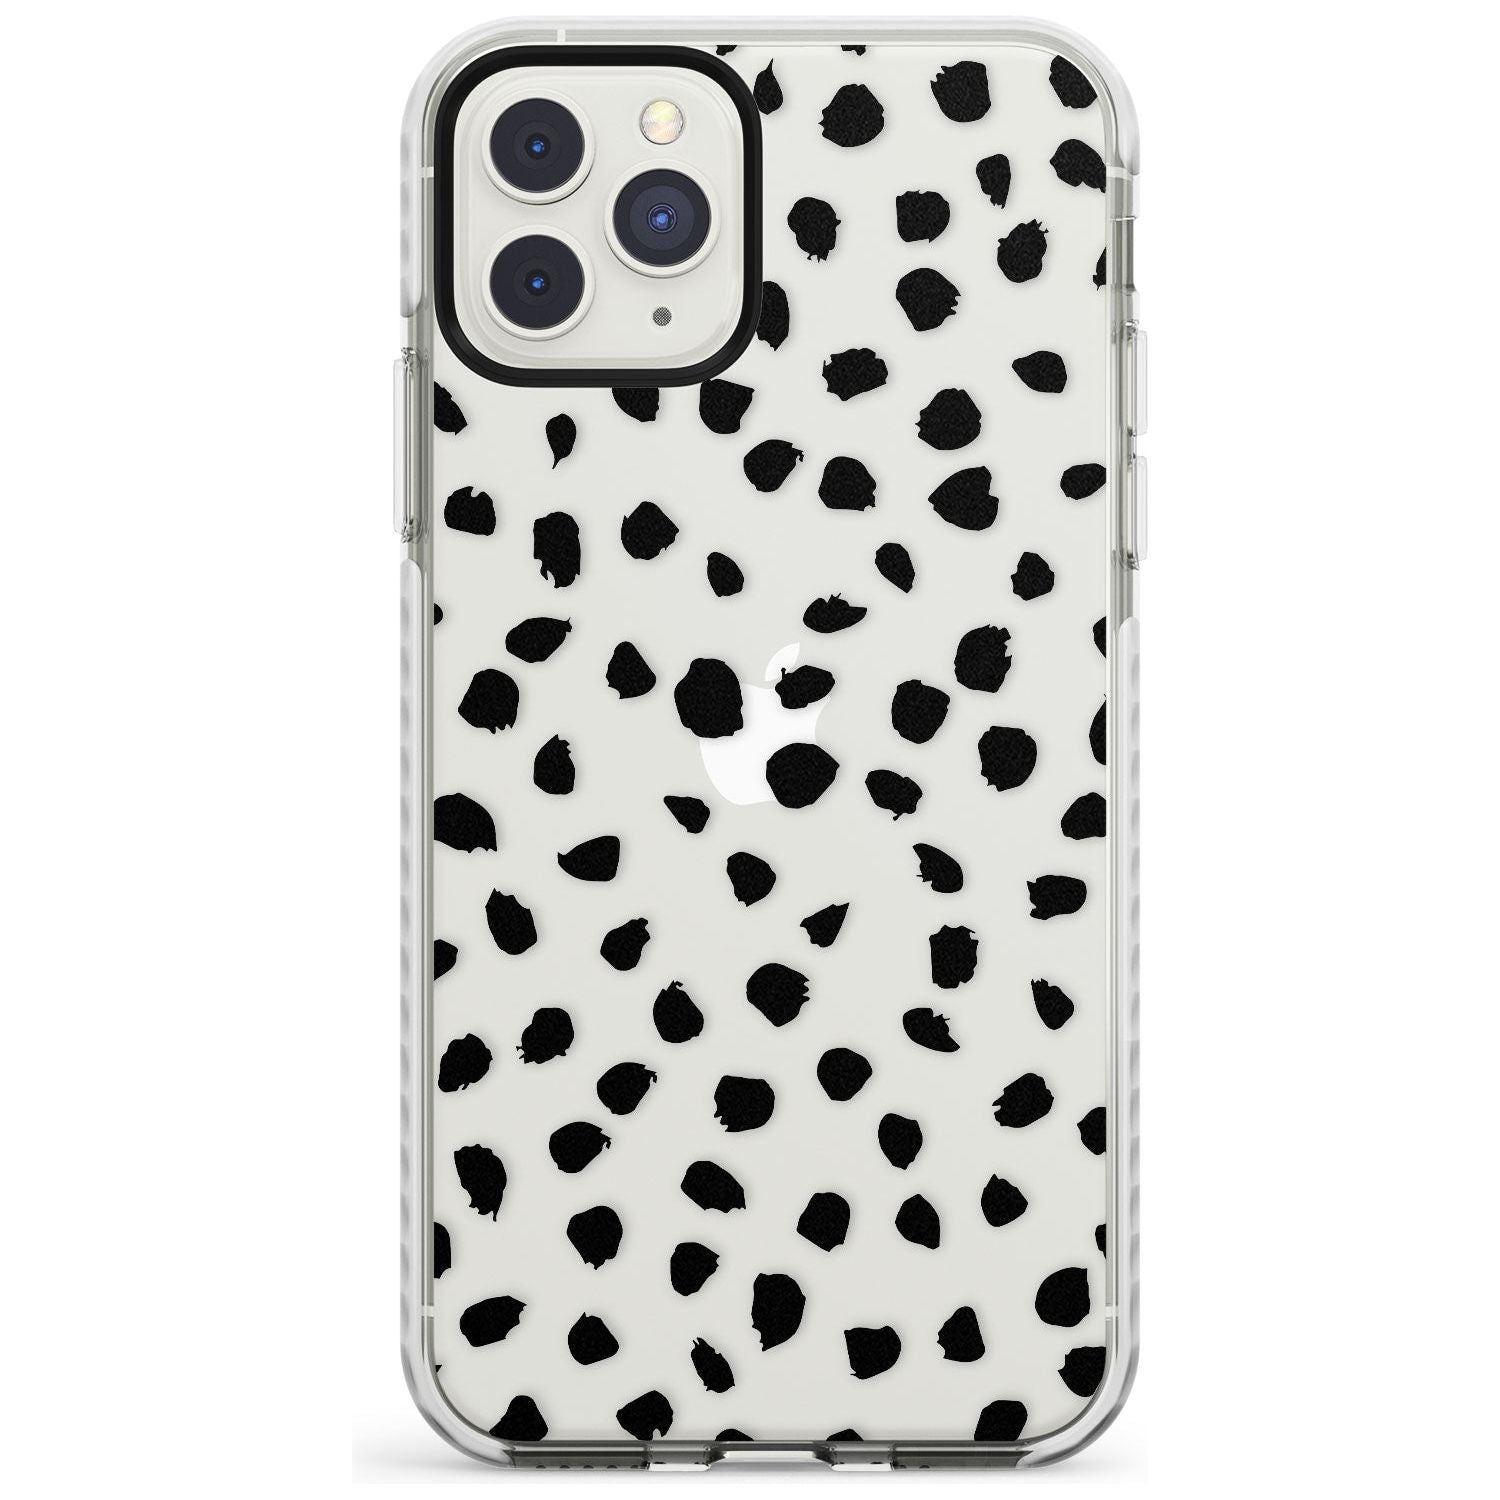 Black on Transparent Dalmatian Polka Dot Spots Impact Phone Case for iPhone 11 Pro Max